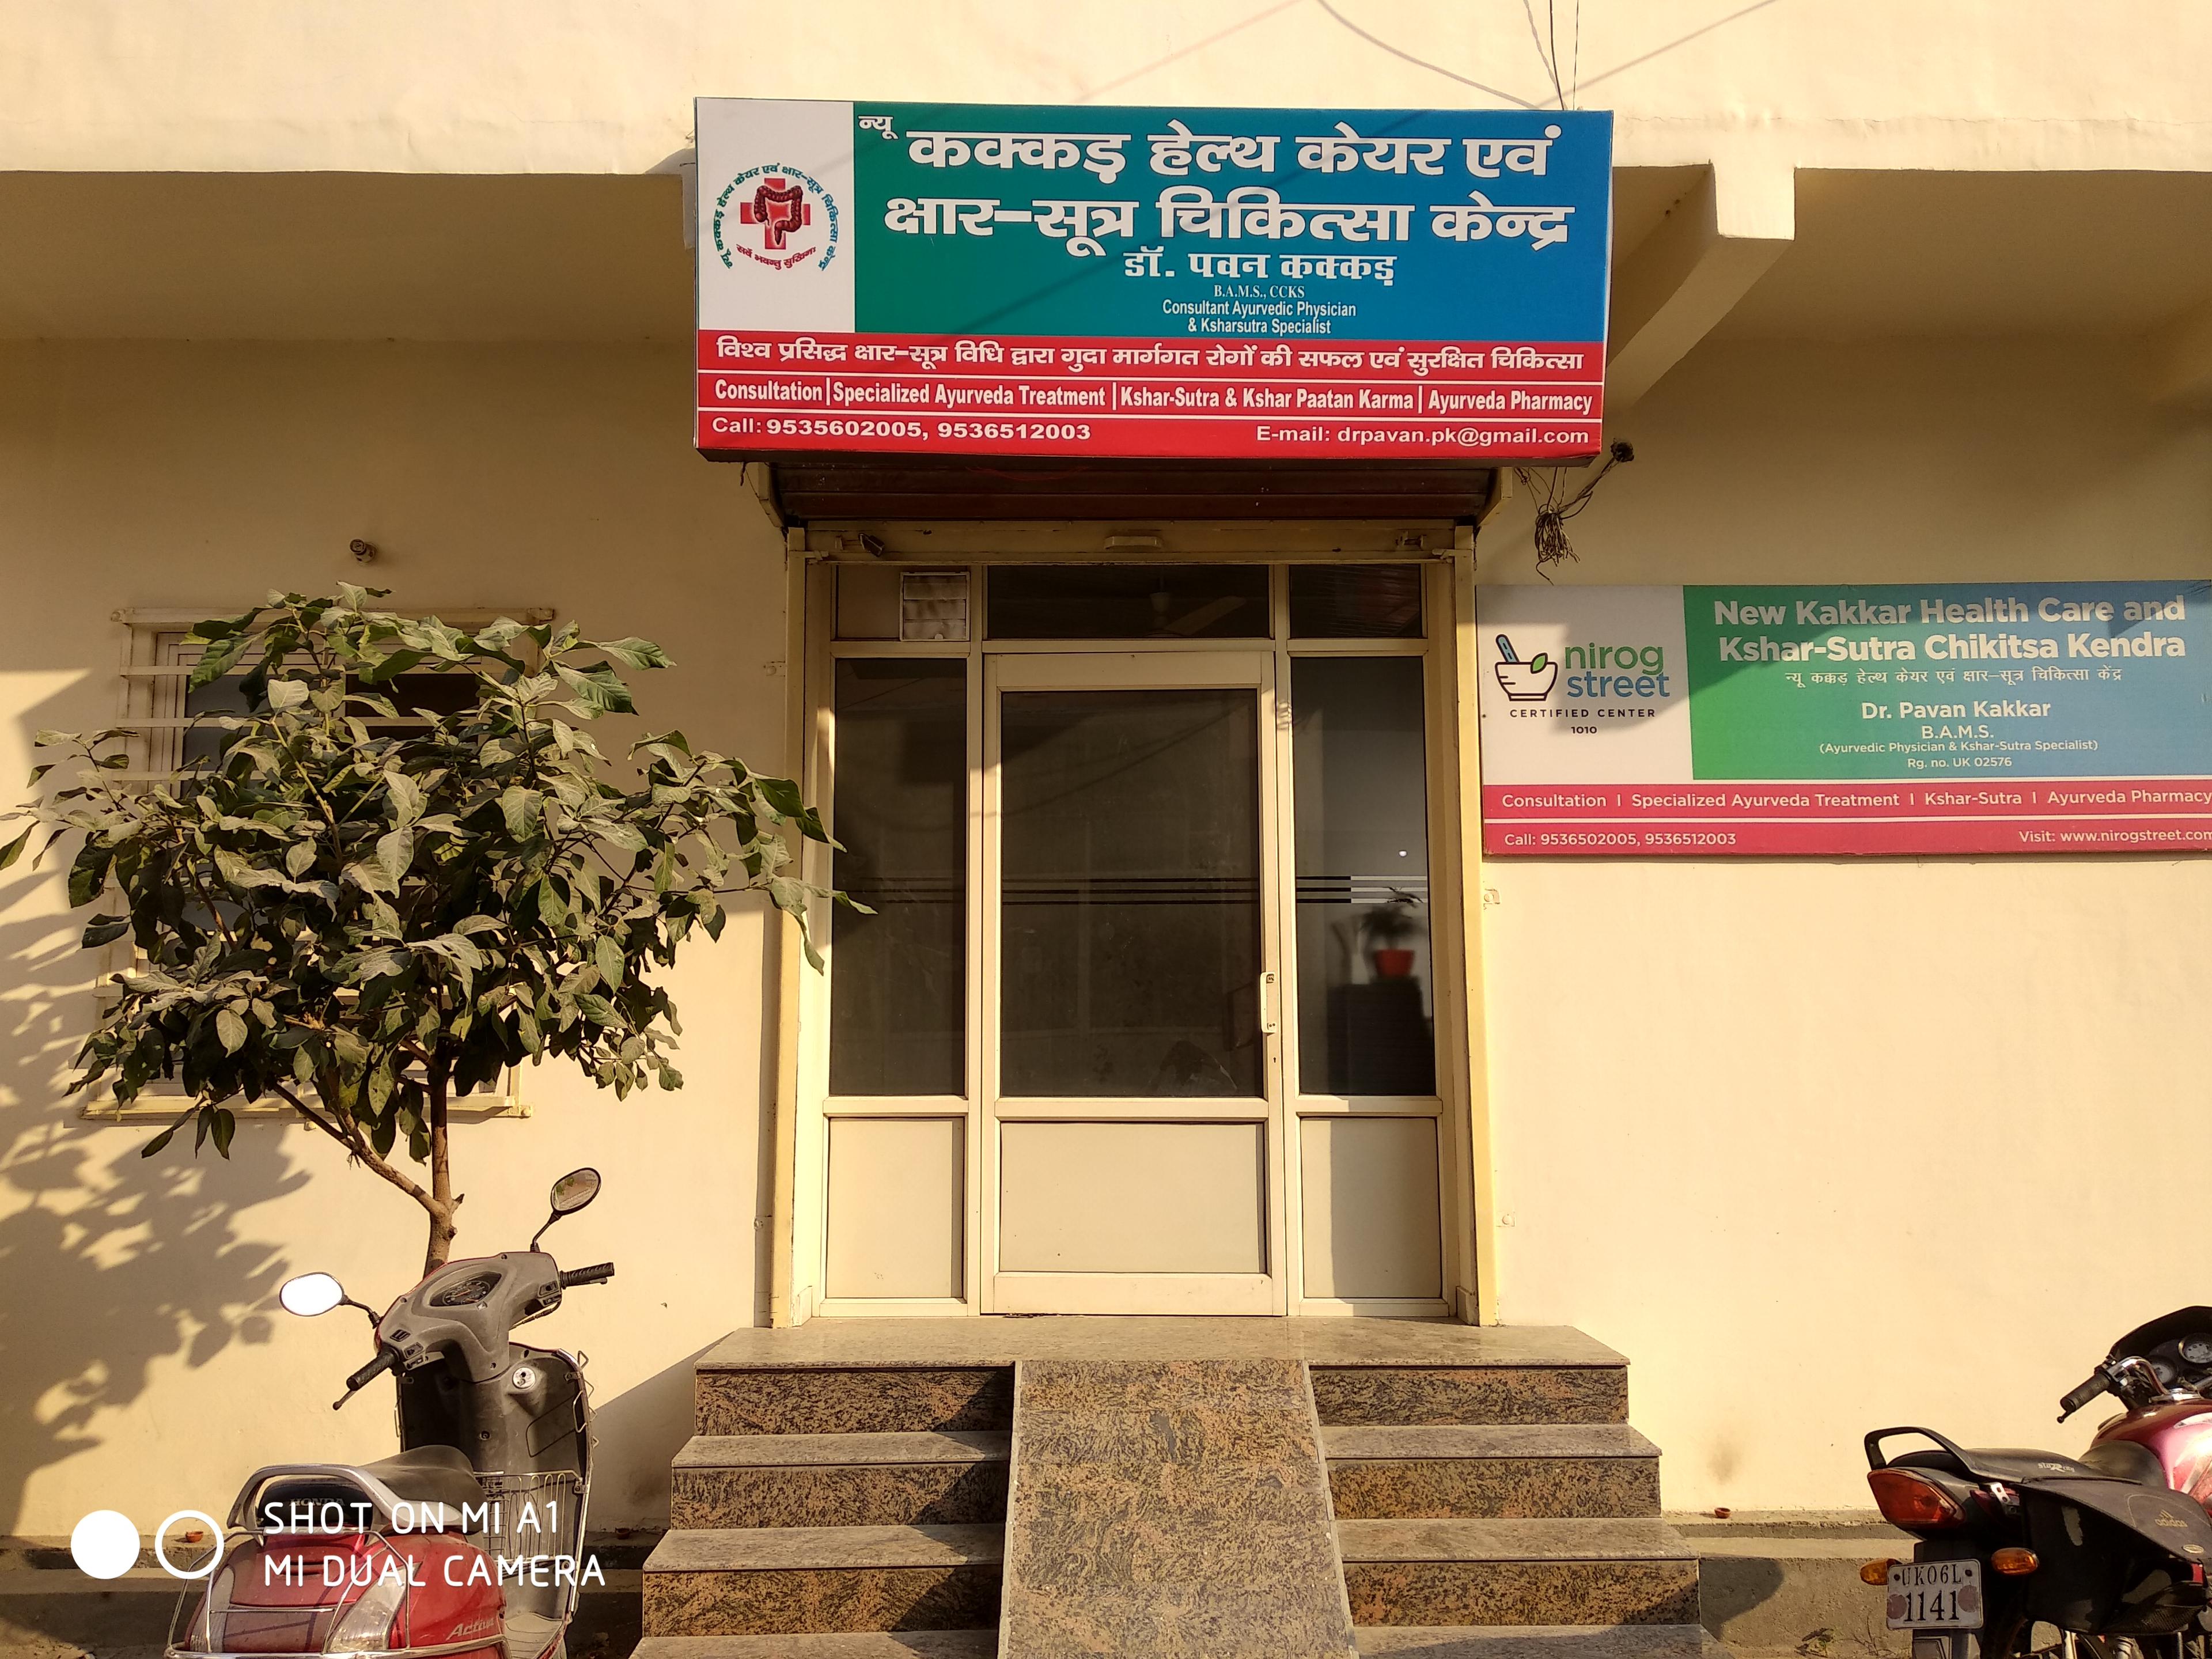 New Kakkar Health Care and Kshar-Sutra Chikitsa Kendra